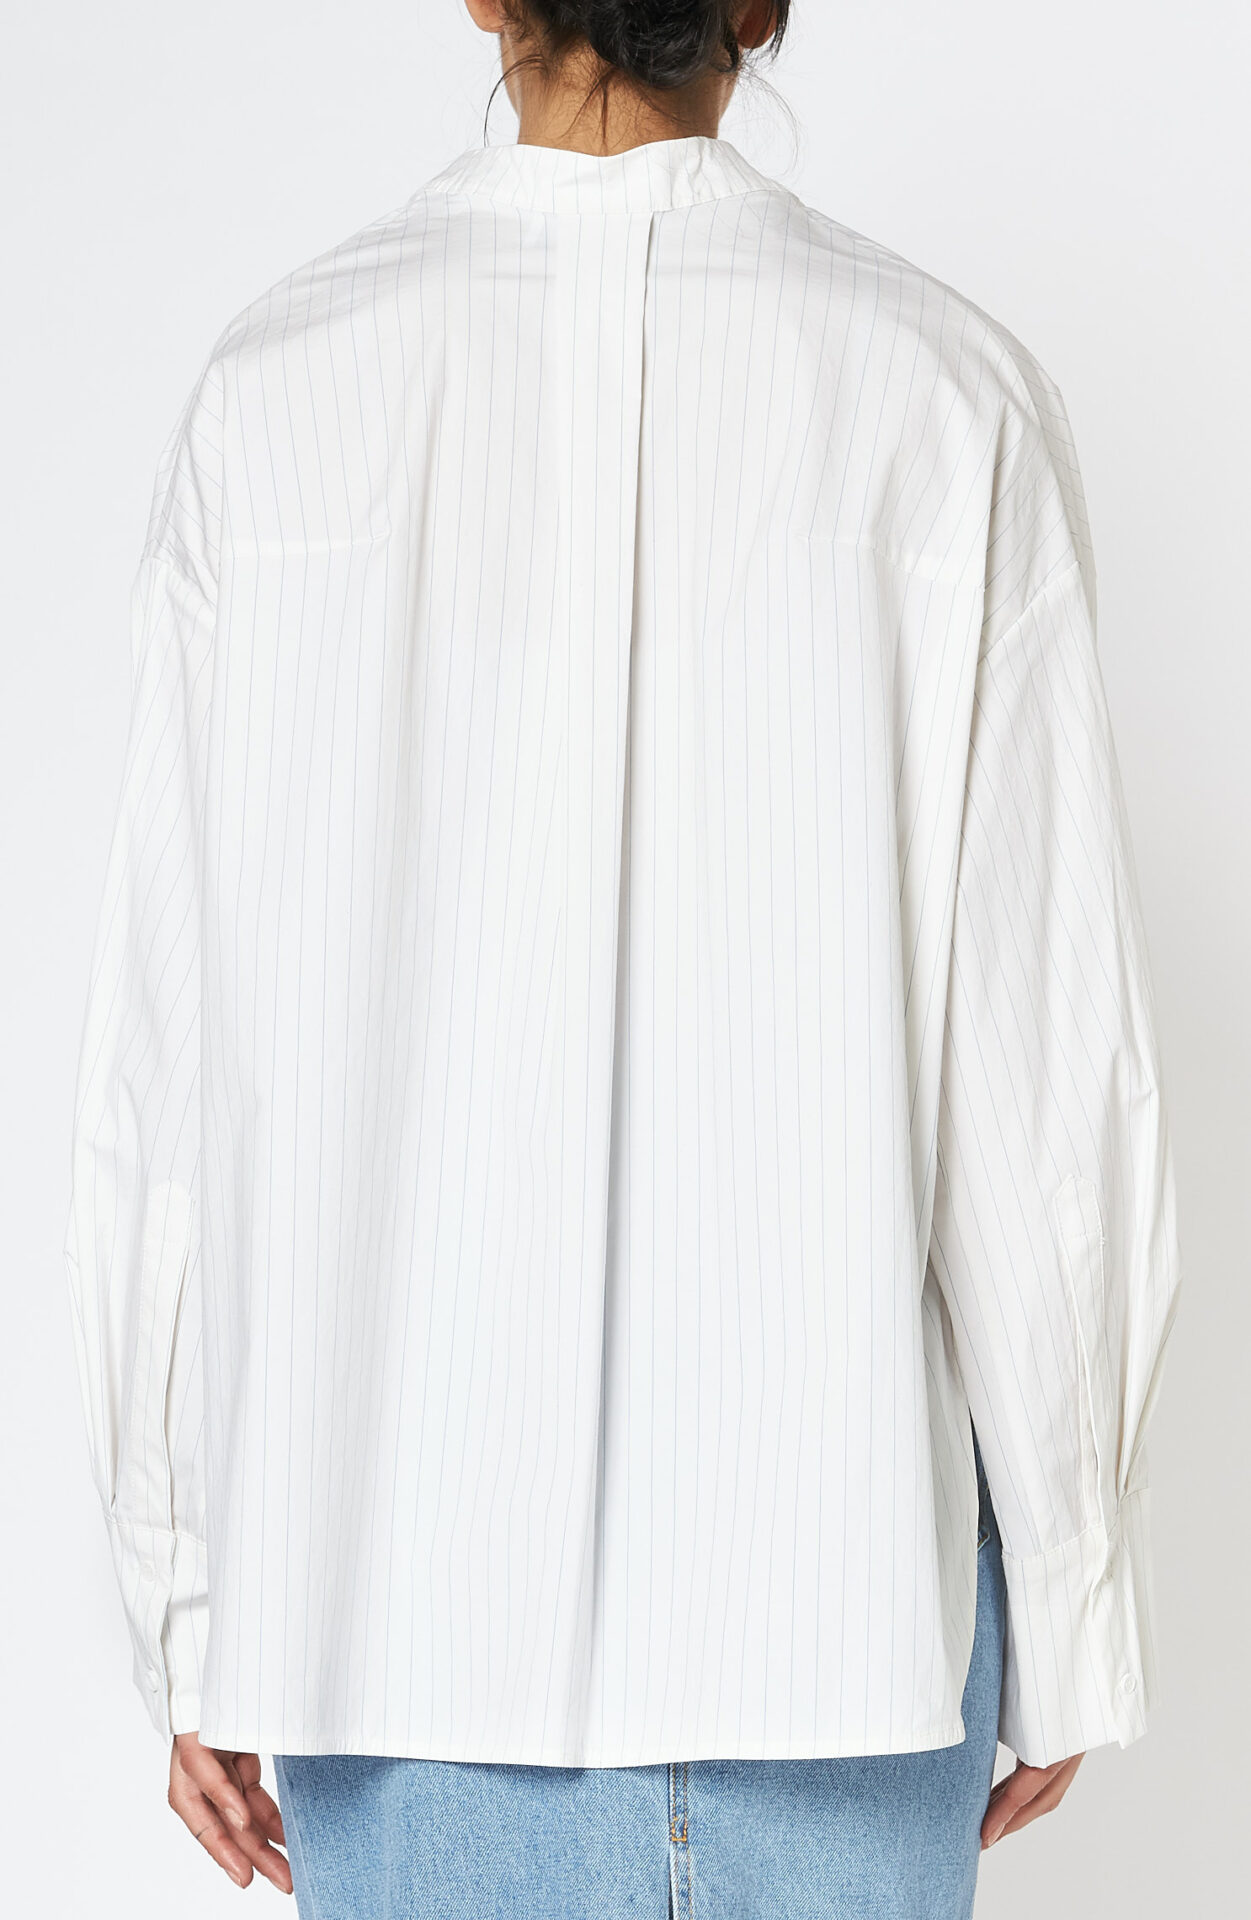 Christian Wijnants - White cotton blouse Tashvi with fine stripes 